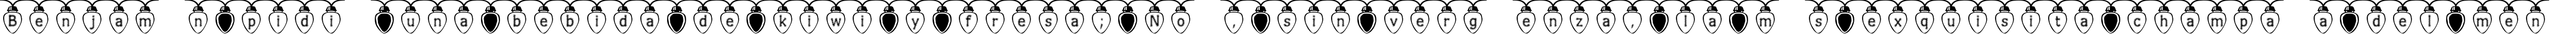 Пример написания шрифтом Fuzzy Xmas Lights текста на испанском